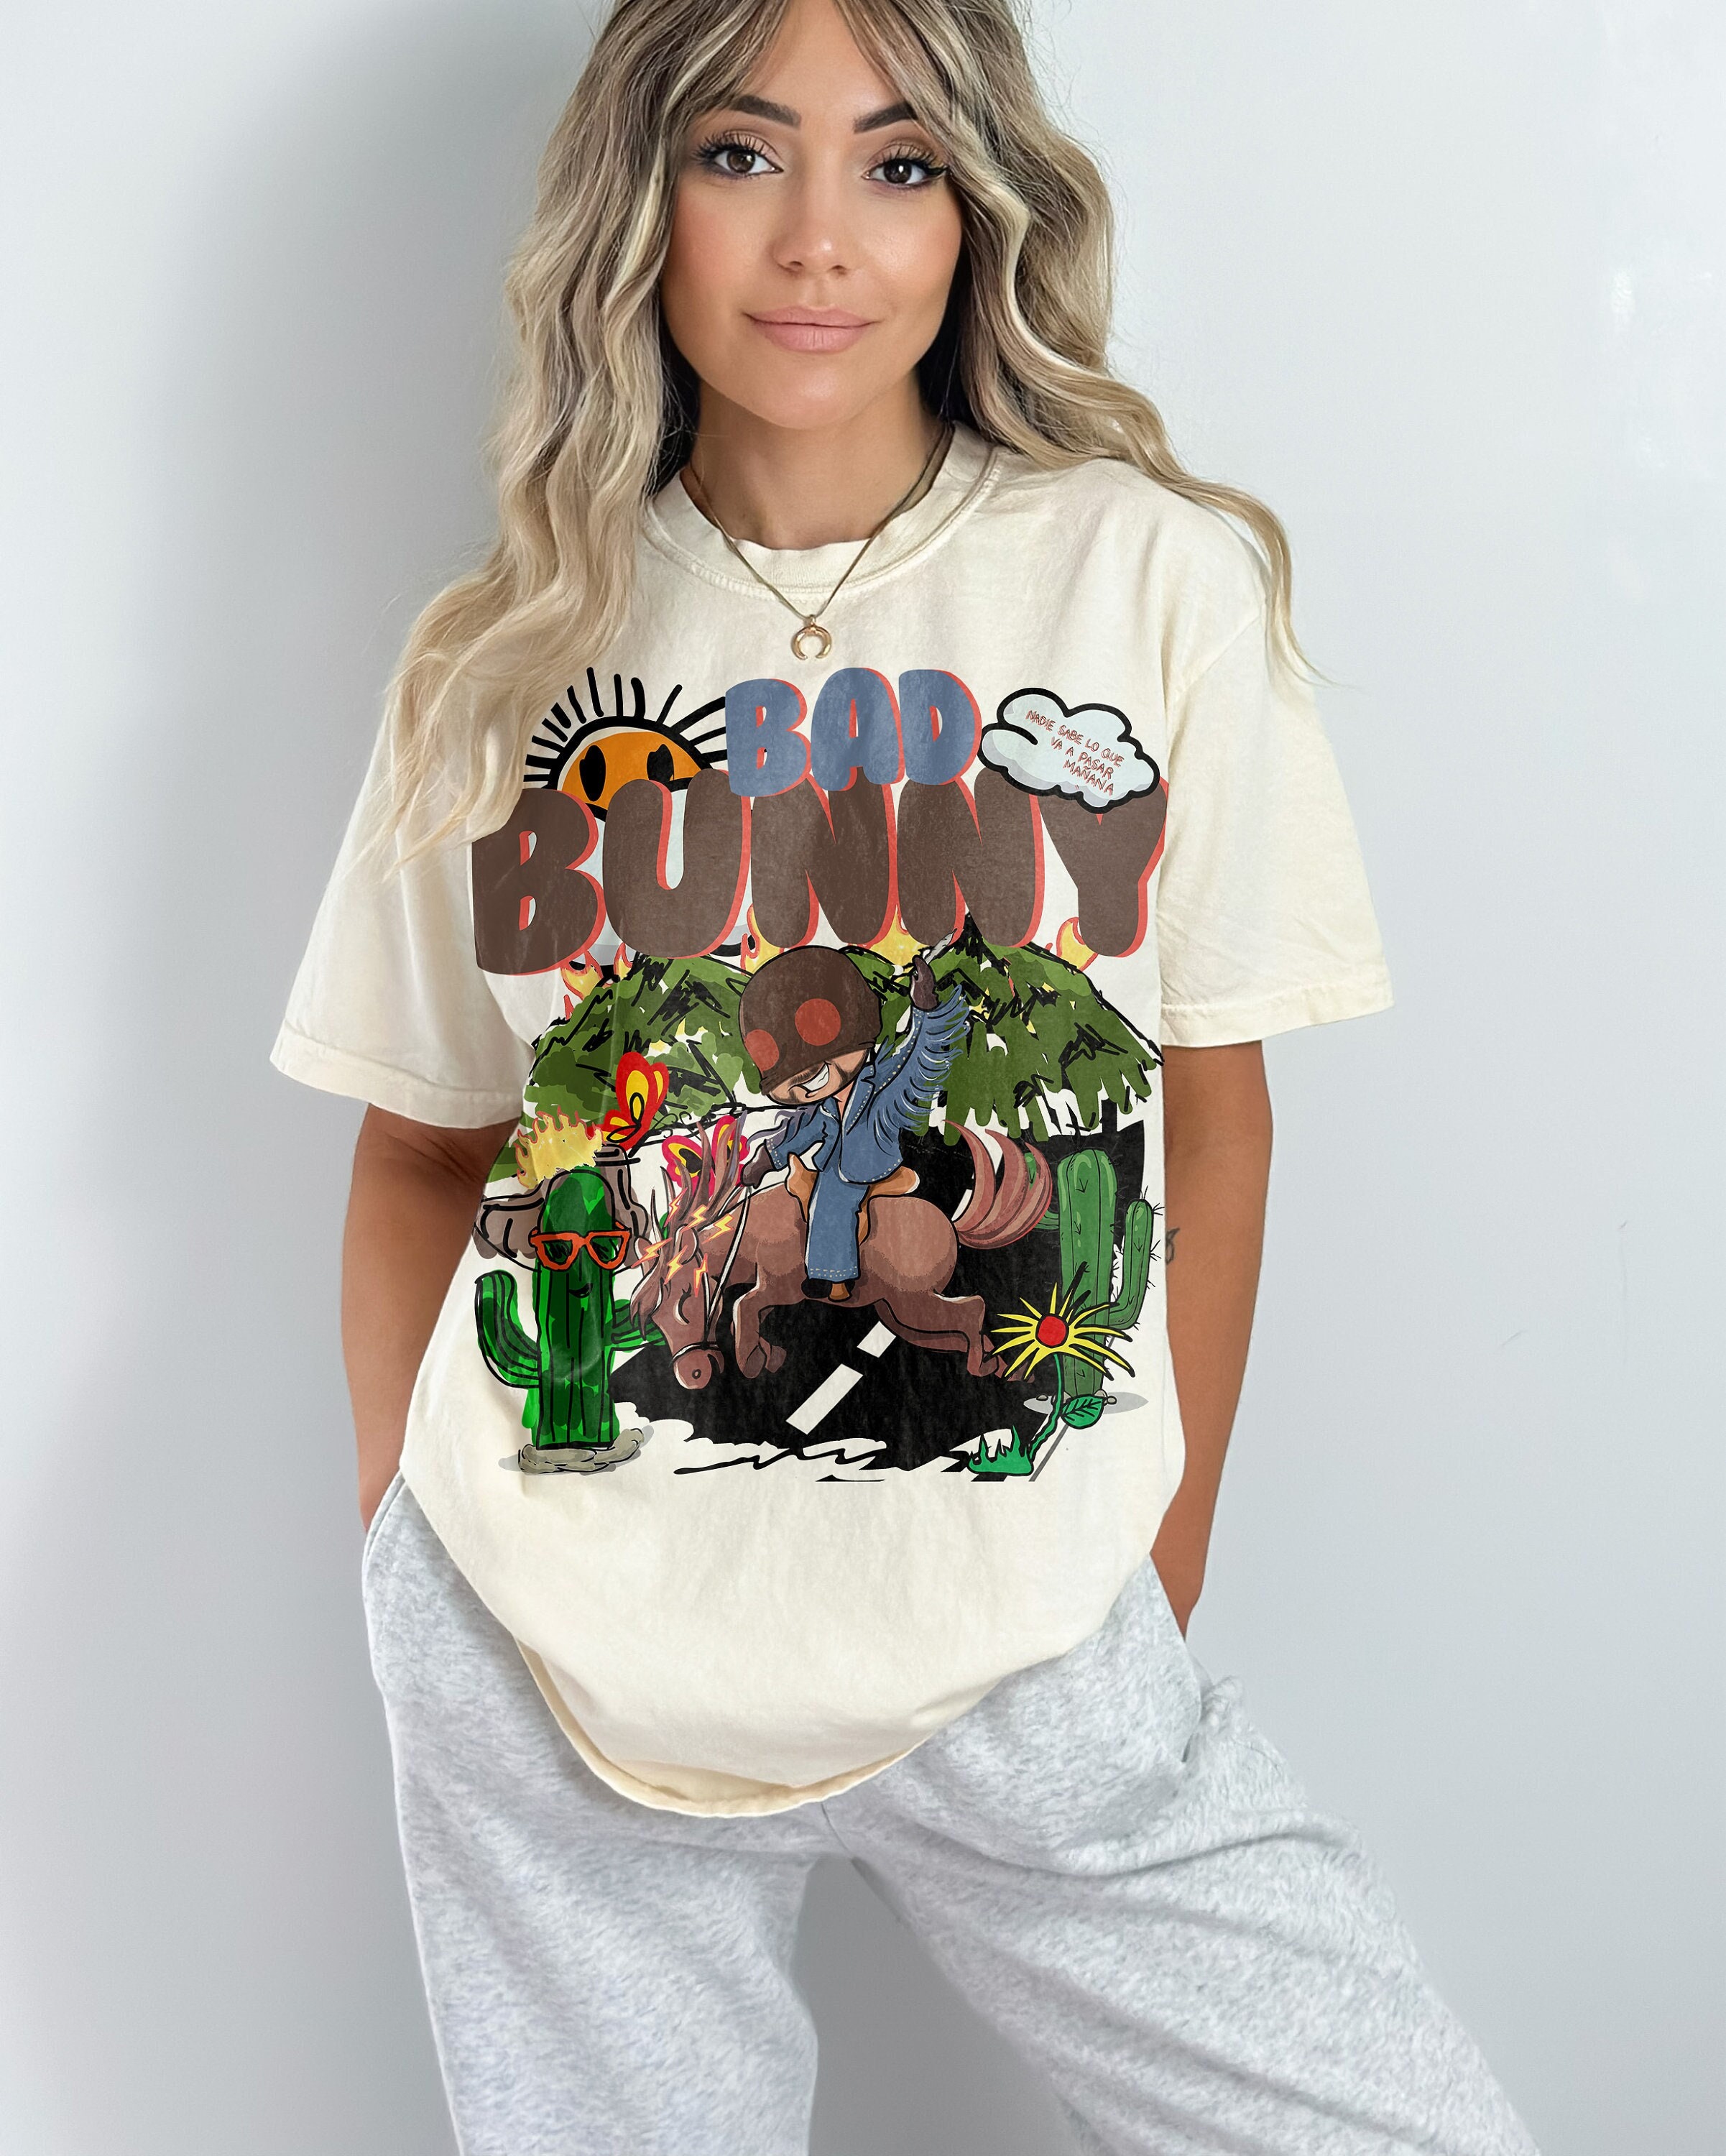 Bad Bunny Shirt, The Most Wanted Tour Shirt, Bad Bunny Gift